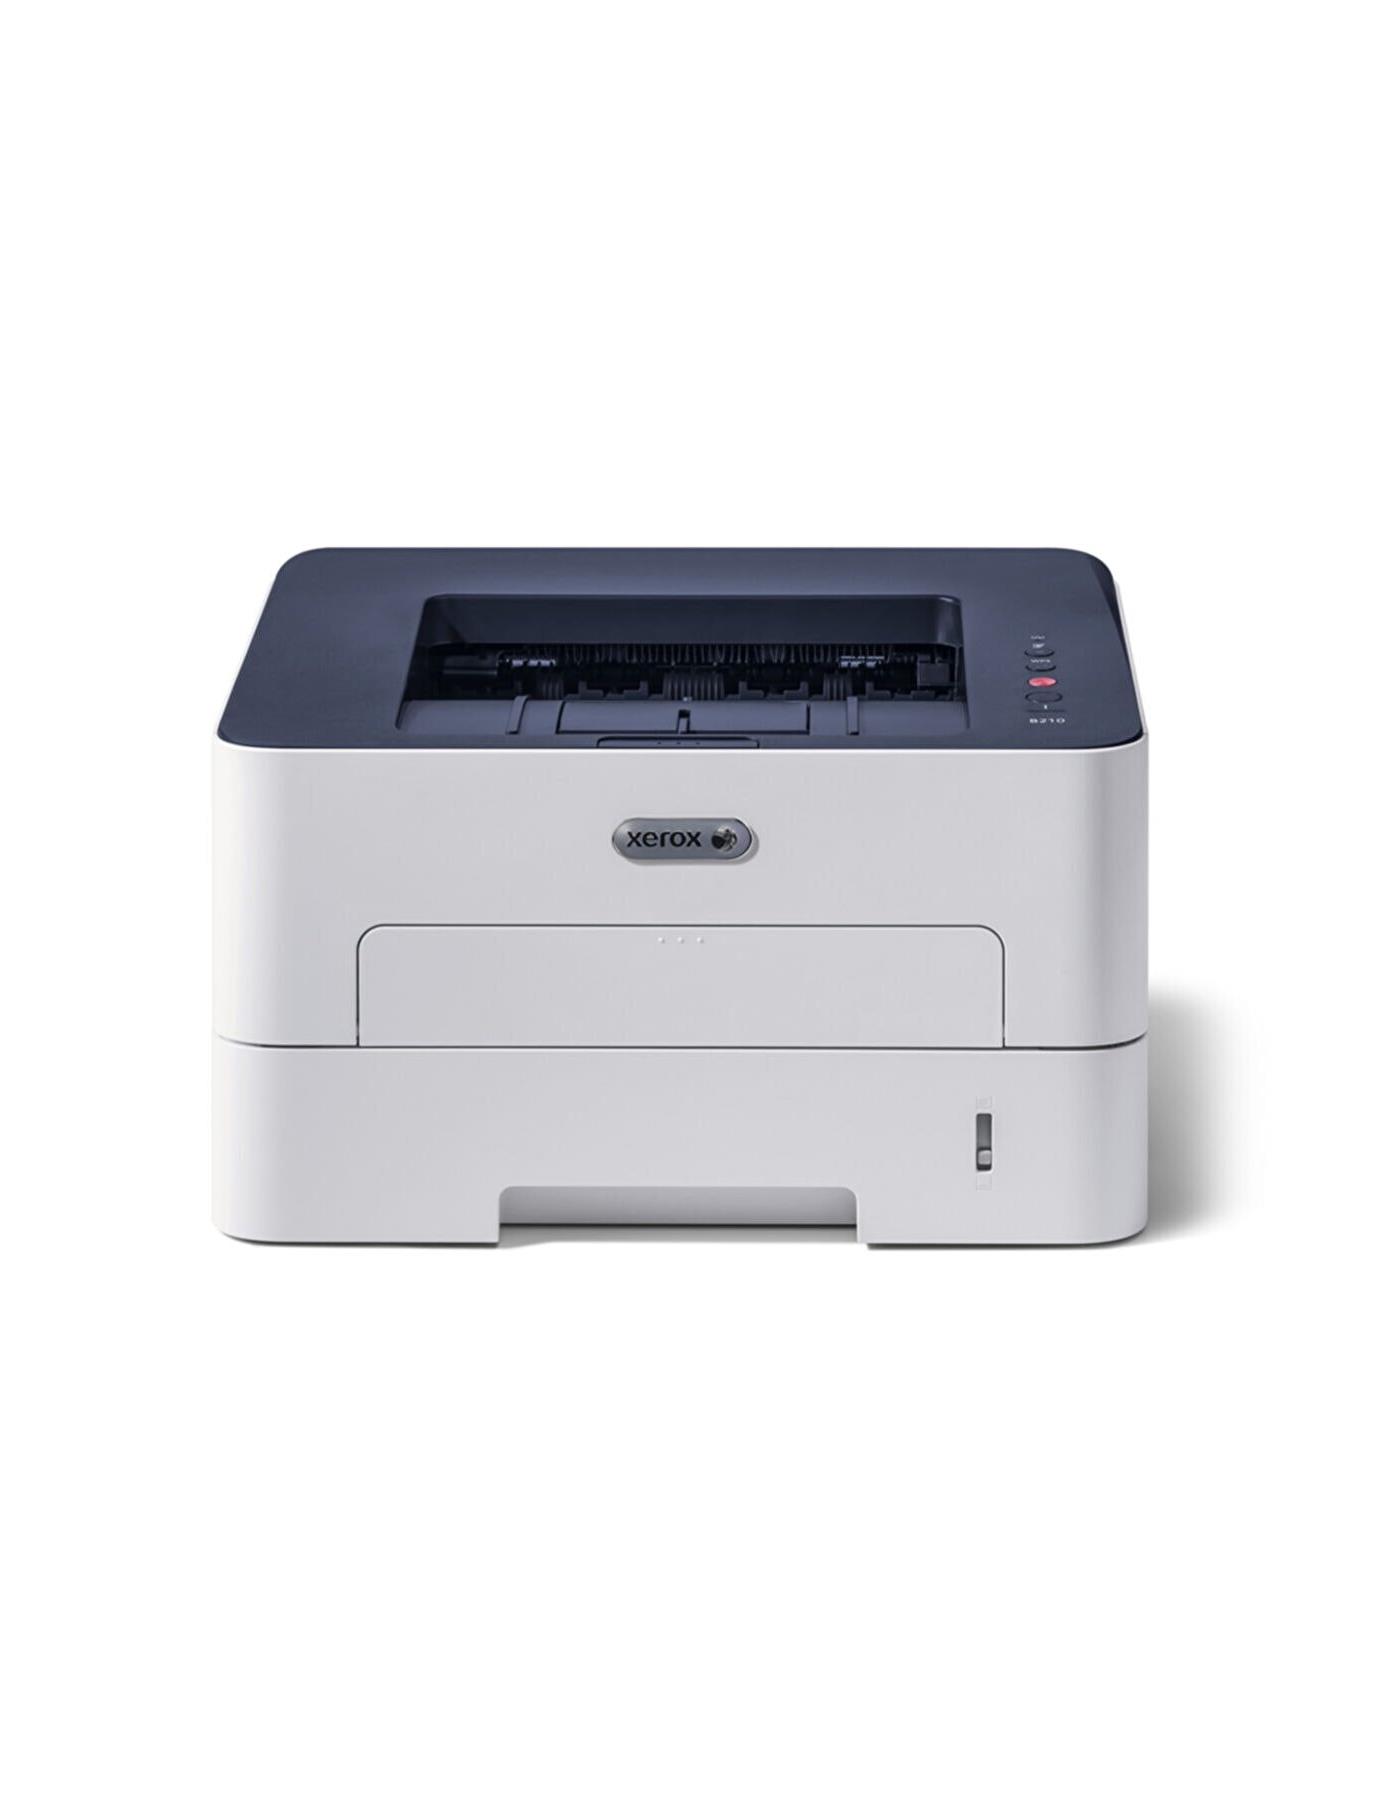 Купить принтер xerox phaser 3020. Принтер лазерный Xerox Phaser 3260dni. Лазерный принтер Xerox Phaser 3052ni. Xerox Phaser 3020. Принтер Xerox b210dni.